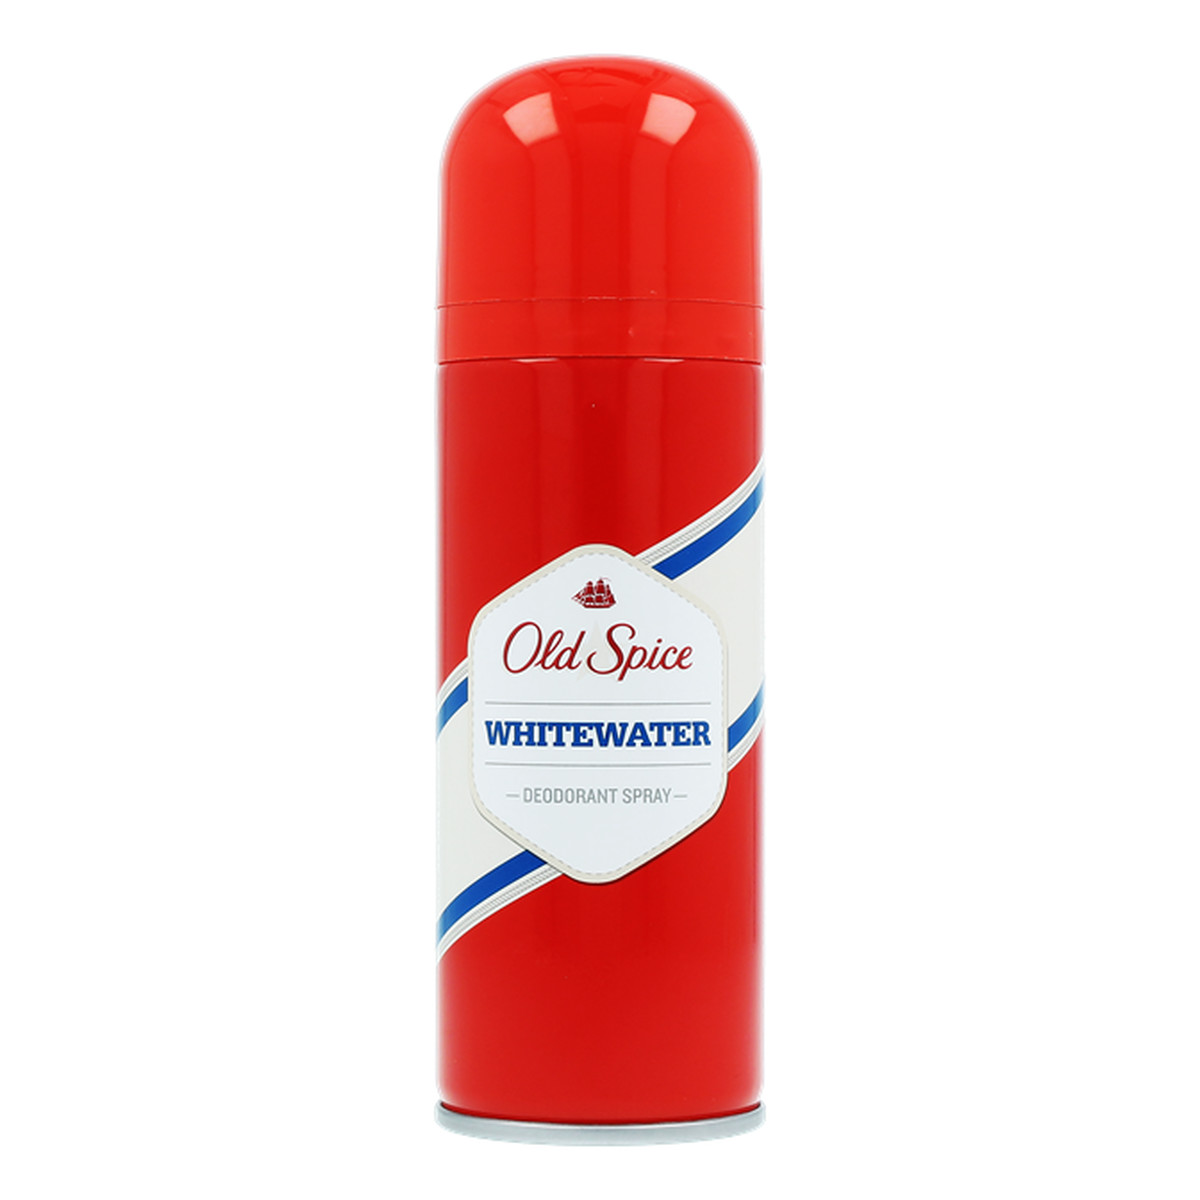 Old Spice Whitewater Dezodorant Spray 125ml